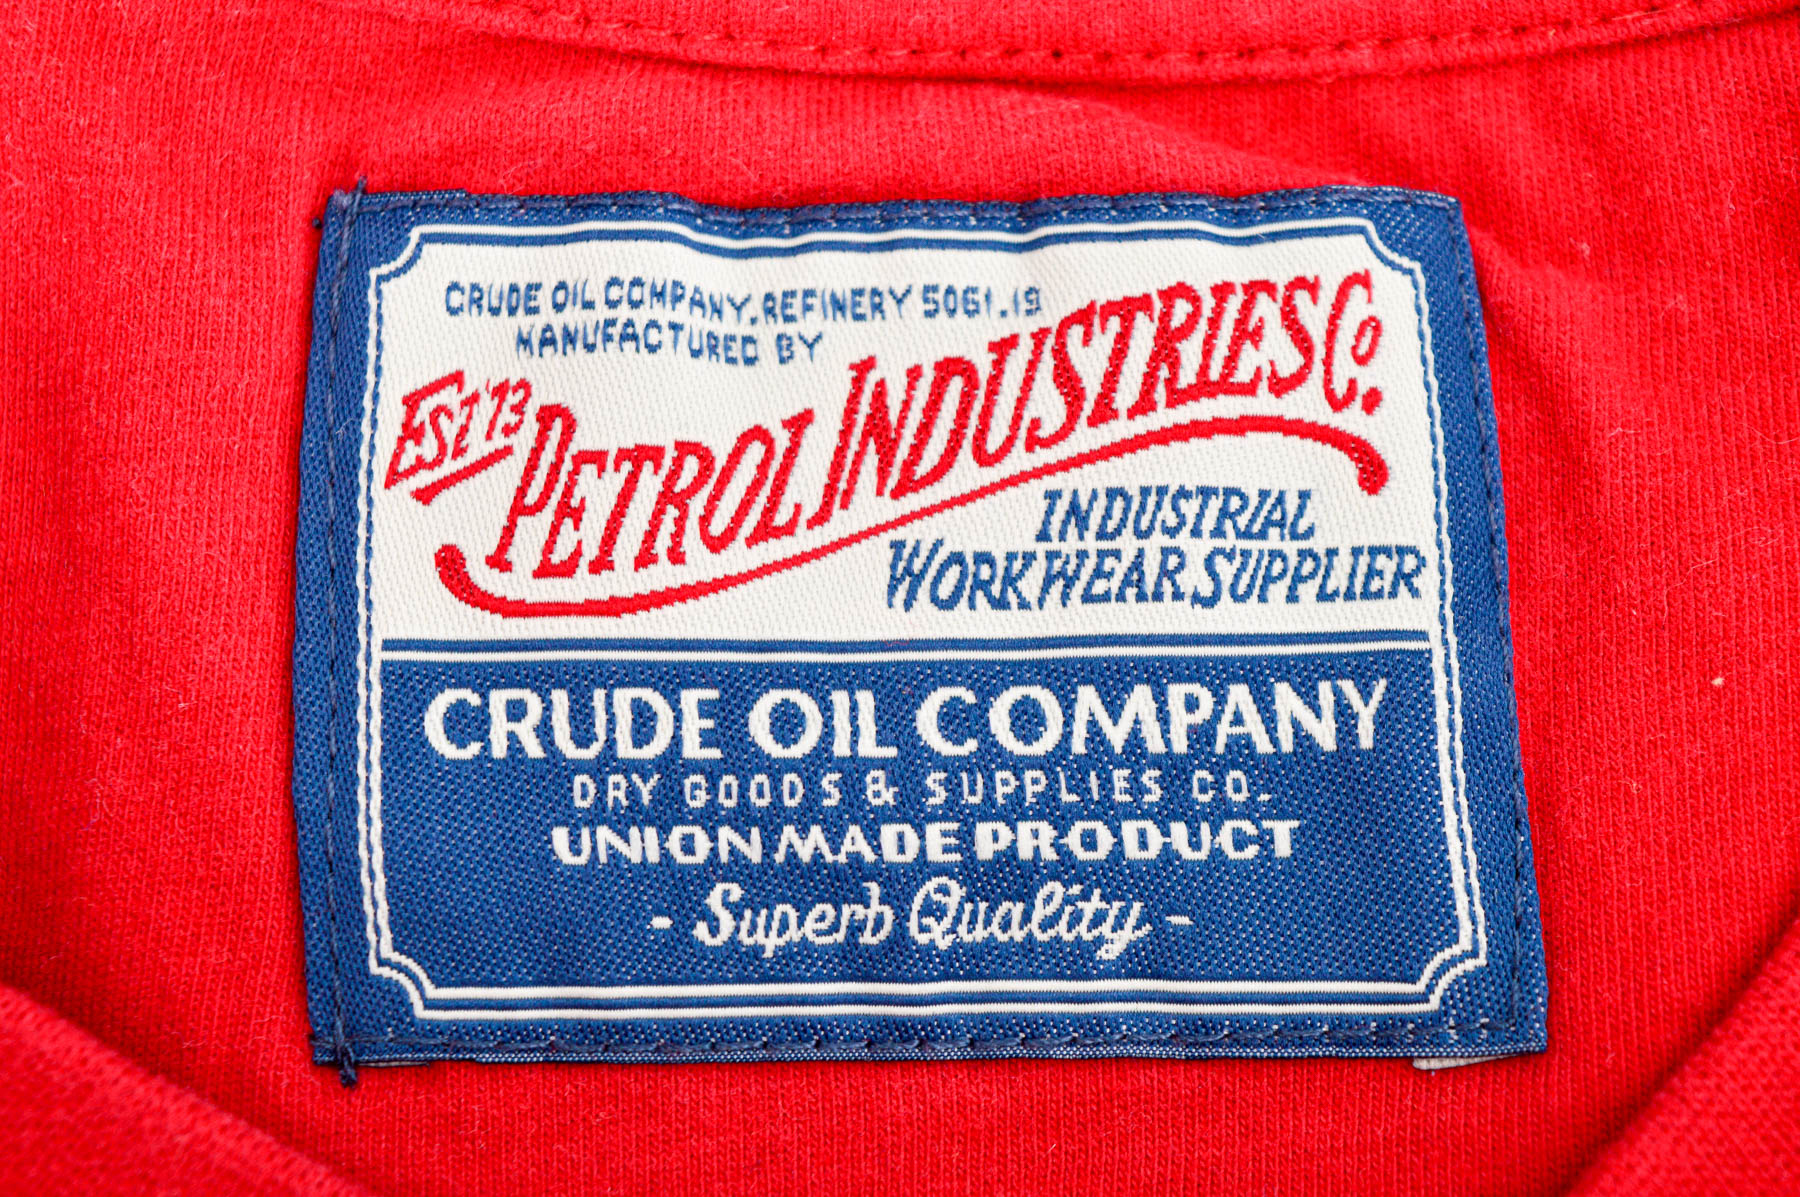 Men's T-shirt - Petrol Industries Co - 2